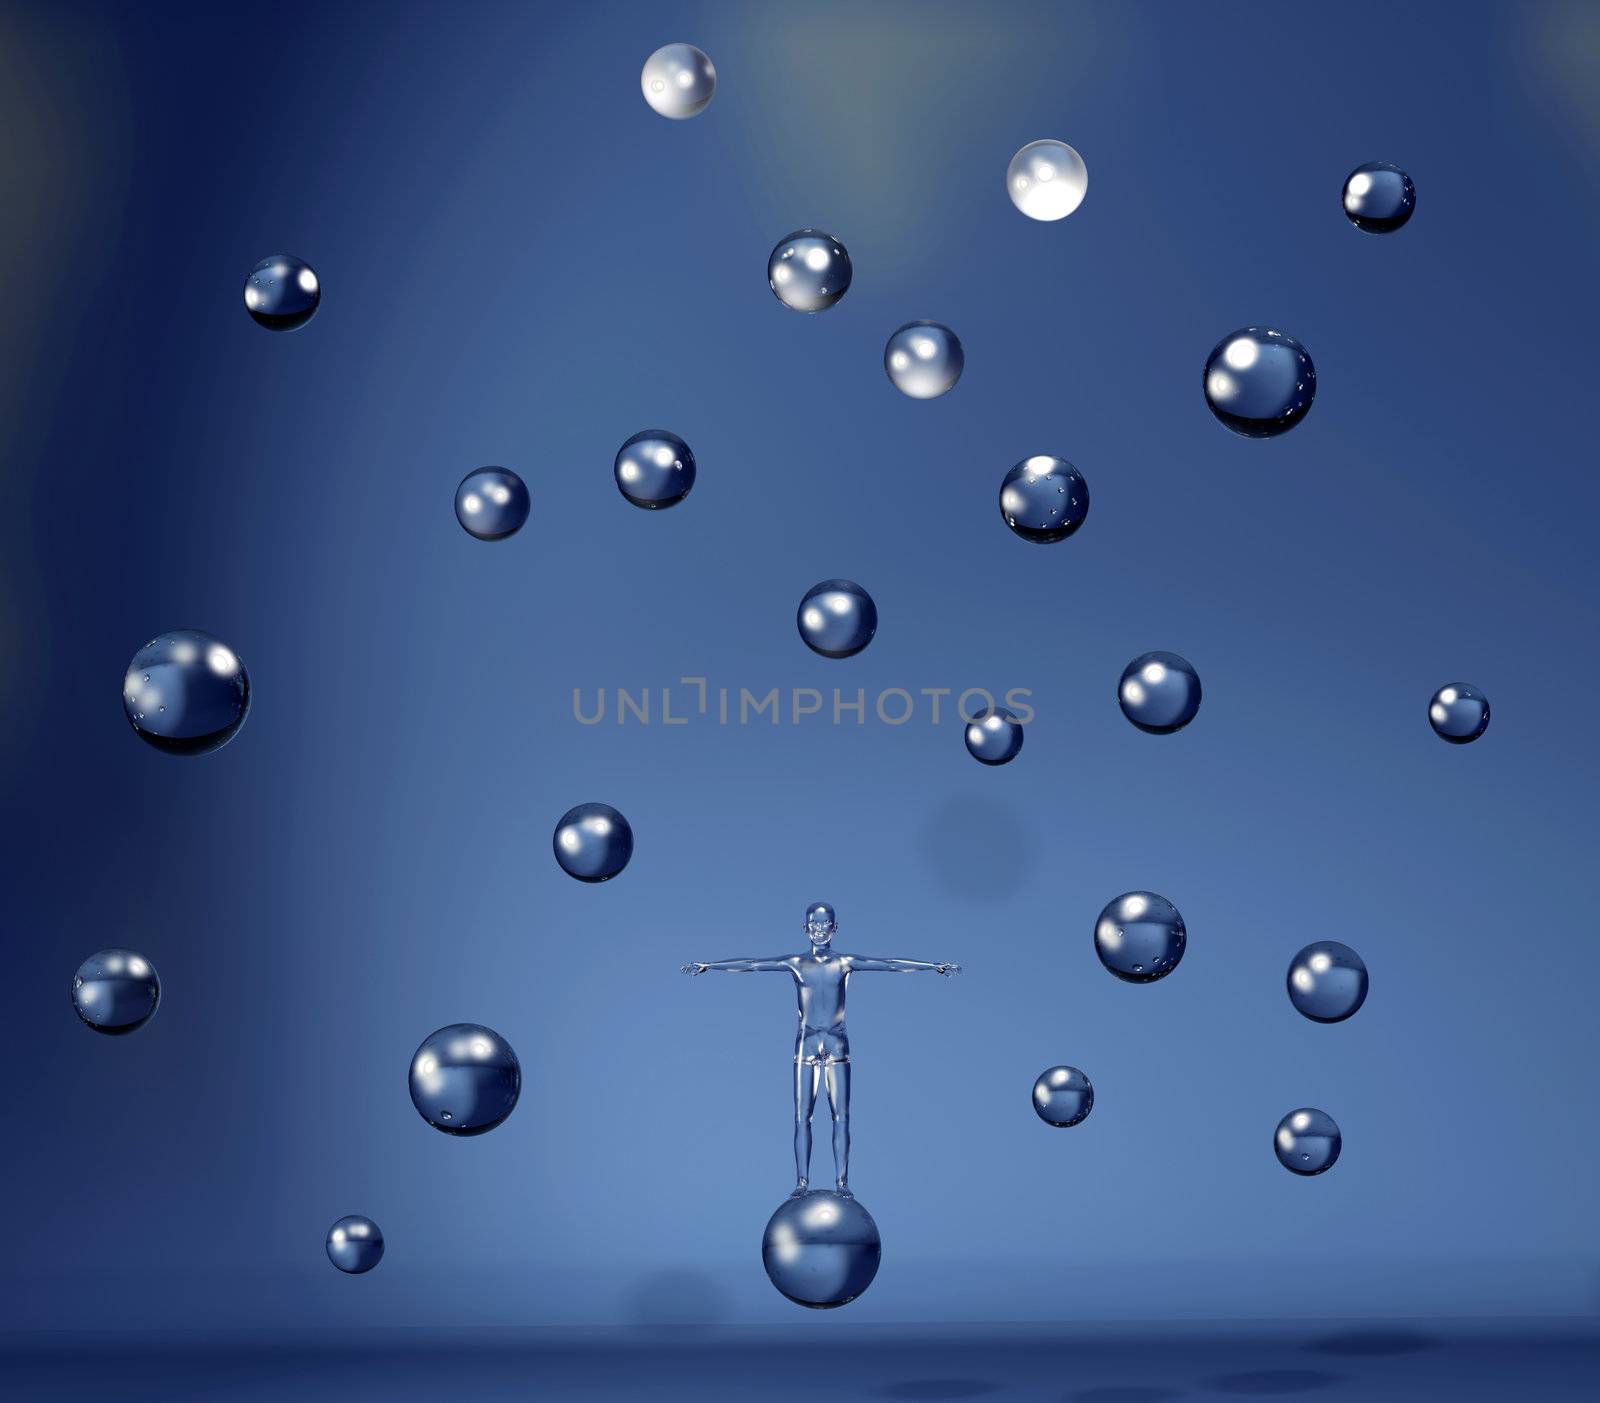 Floating man among transparent glass spheres over blue background.